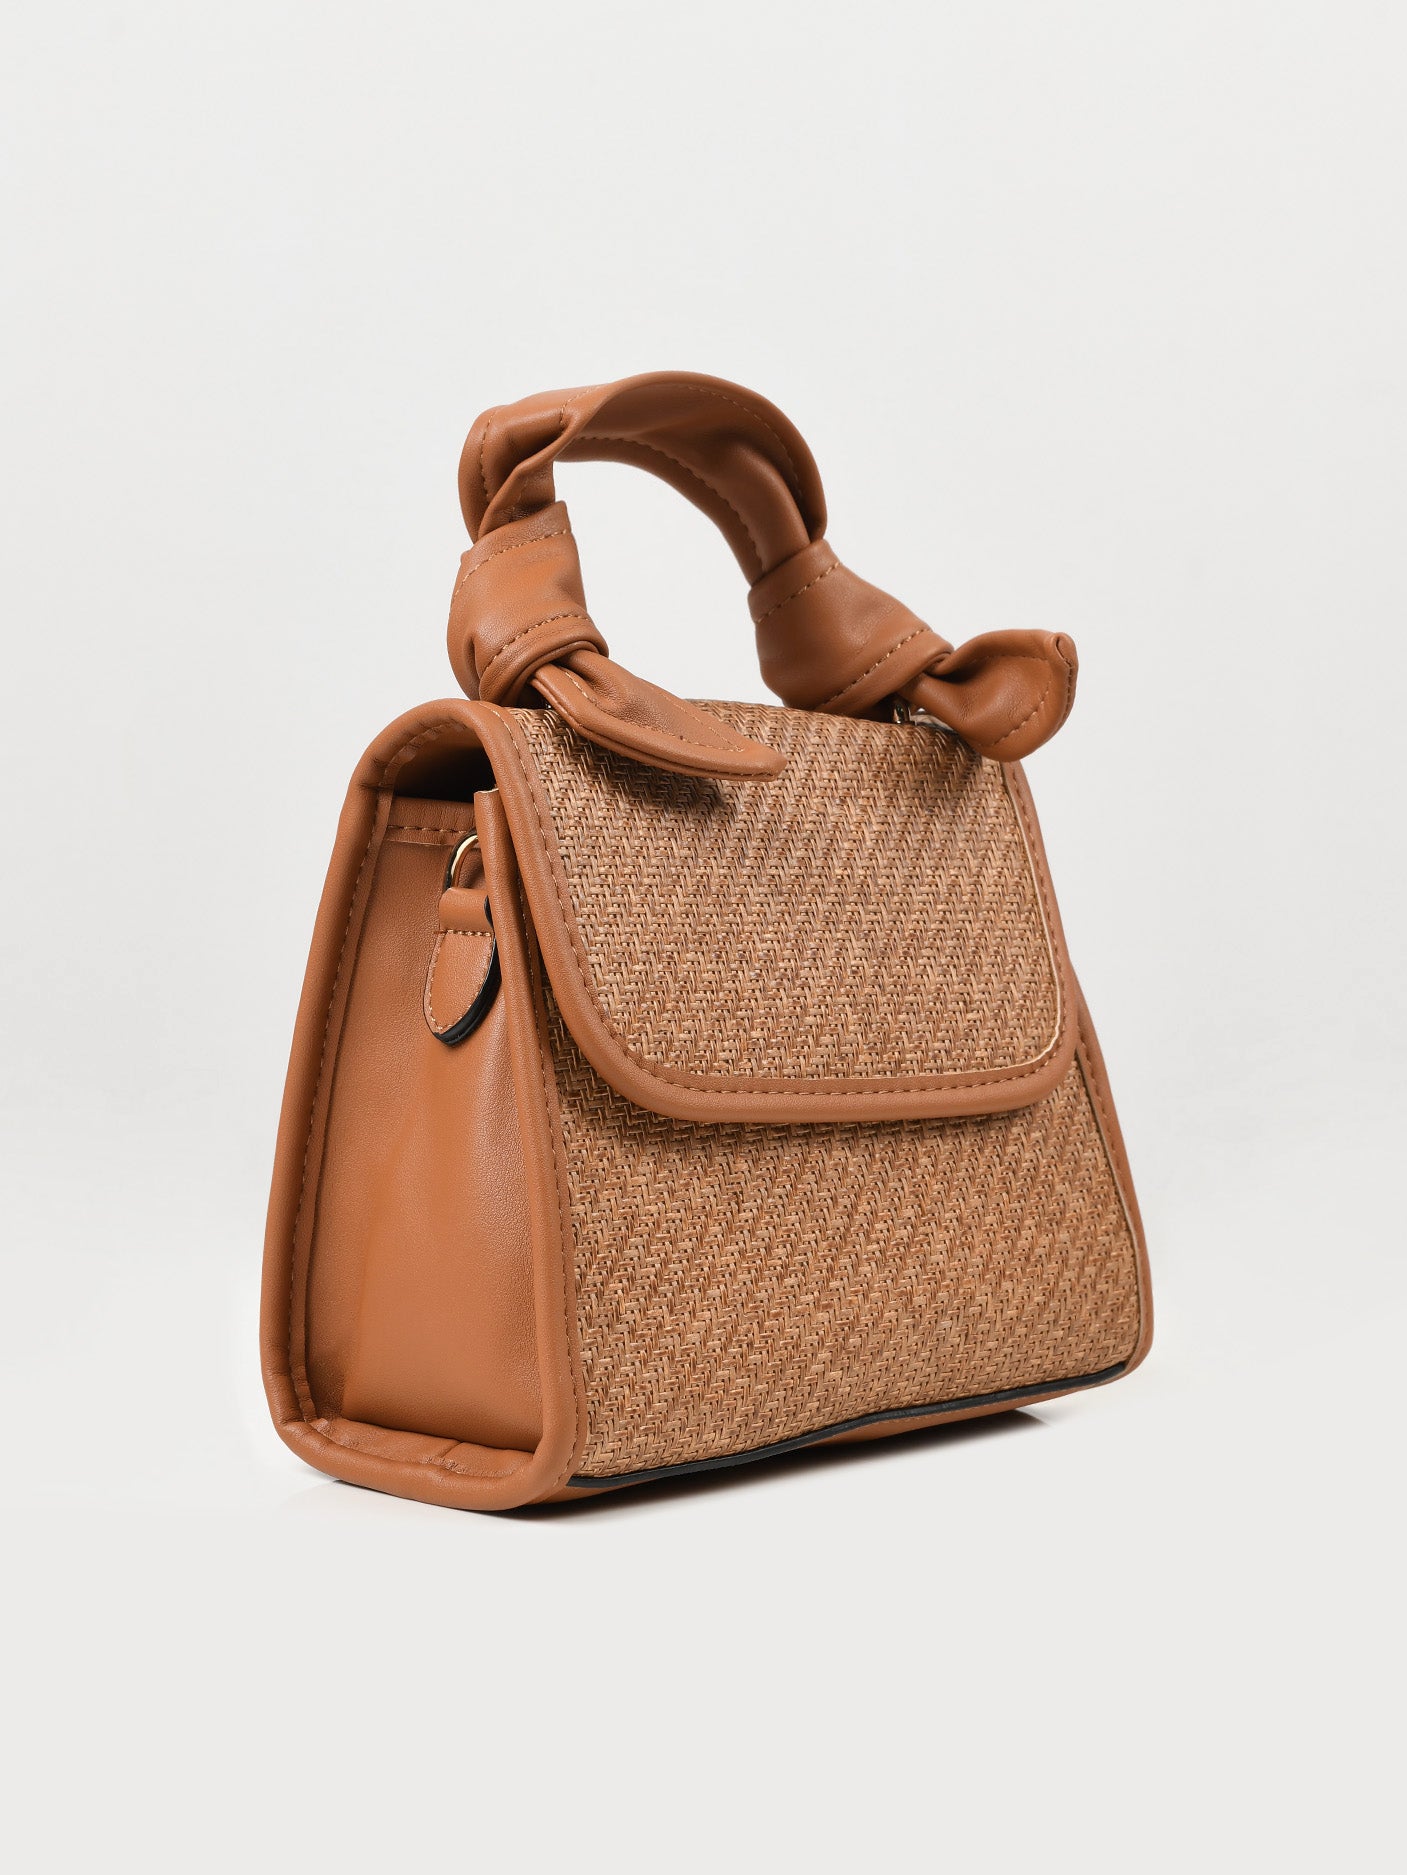 Woven Textured Handbag